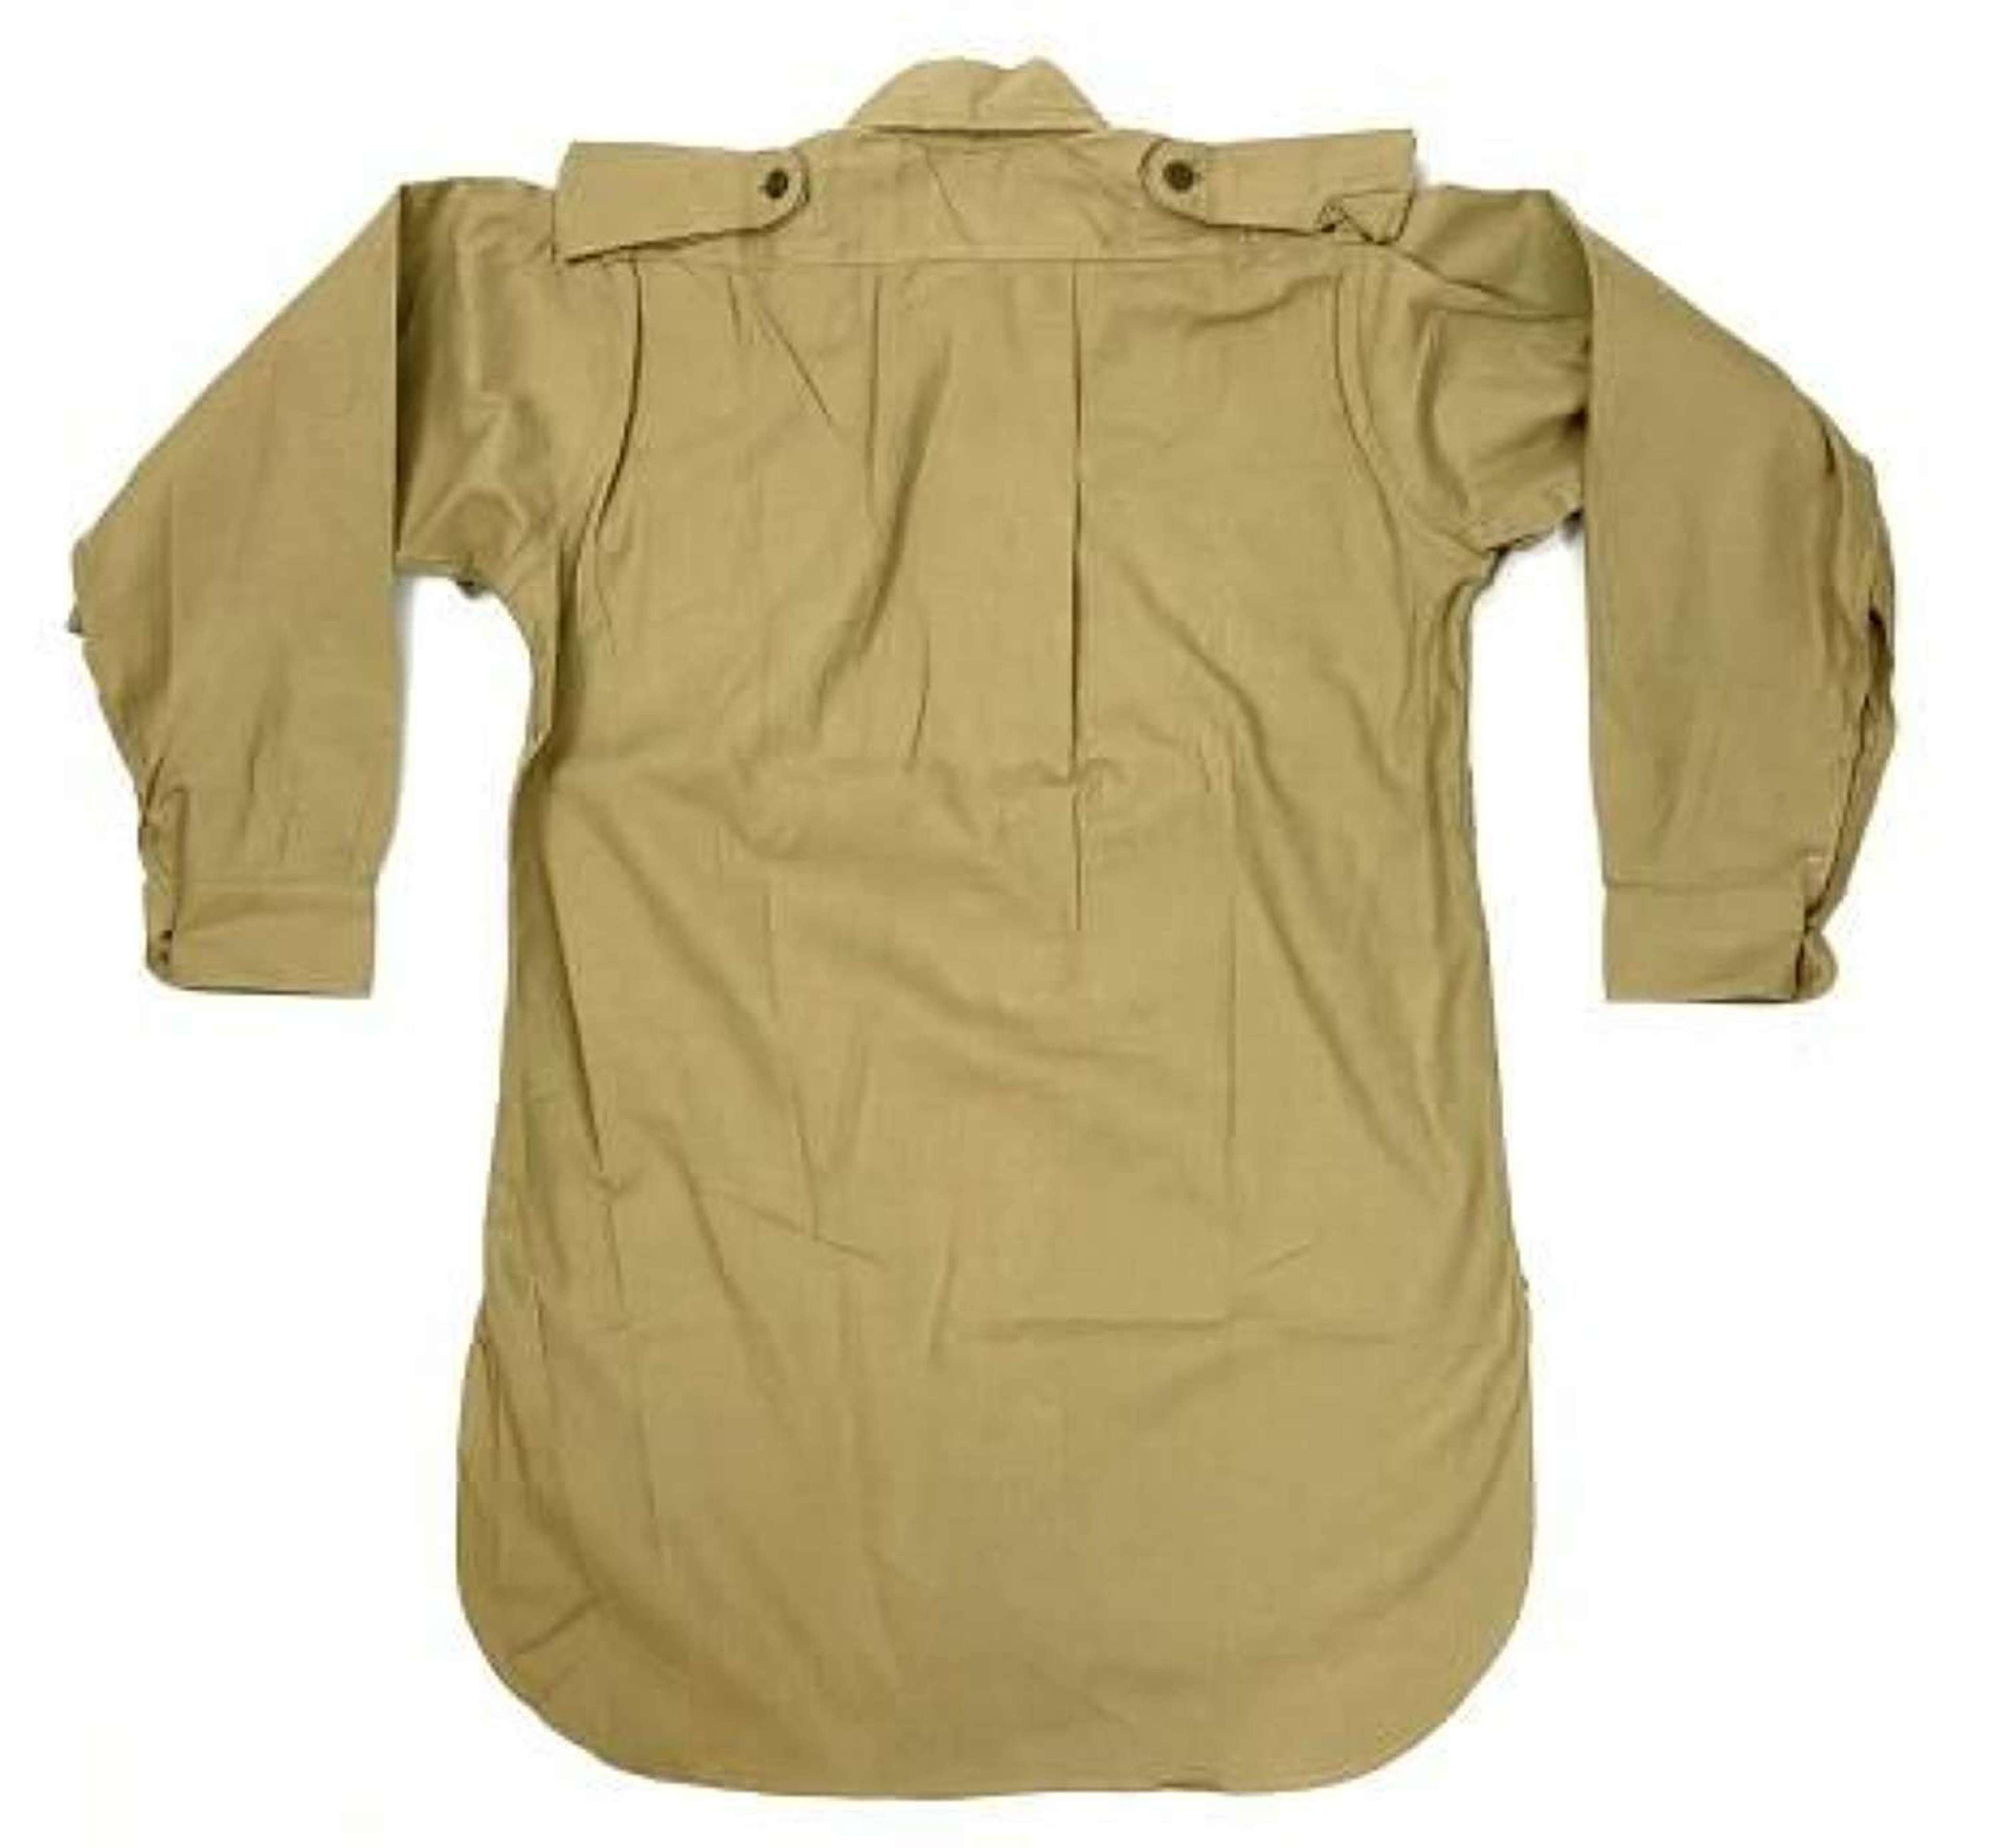 Rare original 1941 Dated British Army Khaki Drill Shirt in Shirts